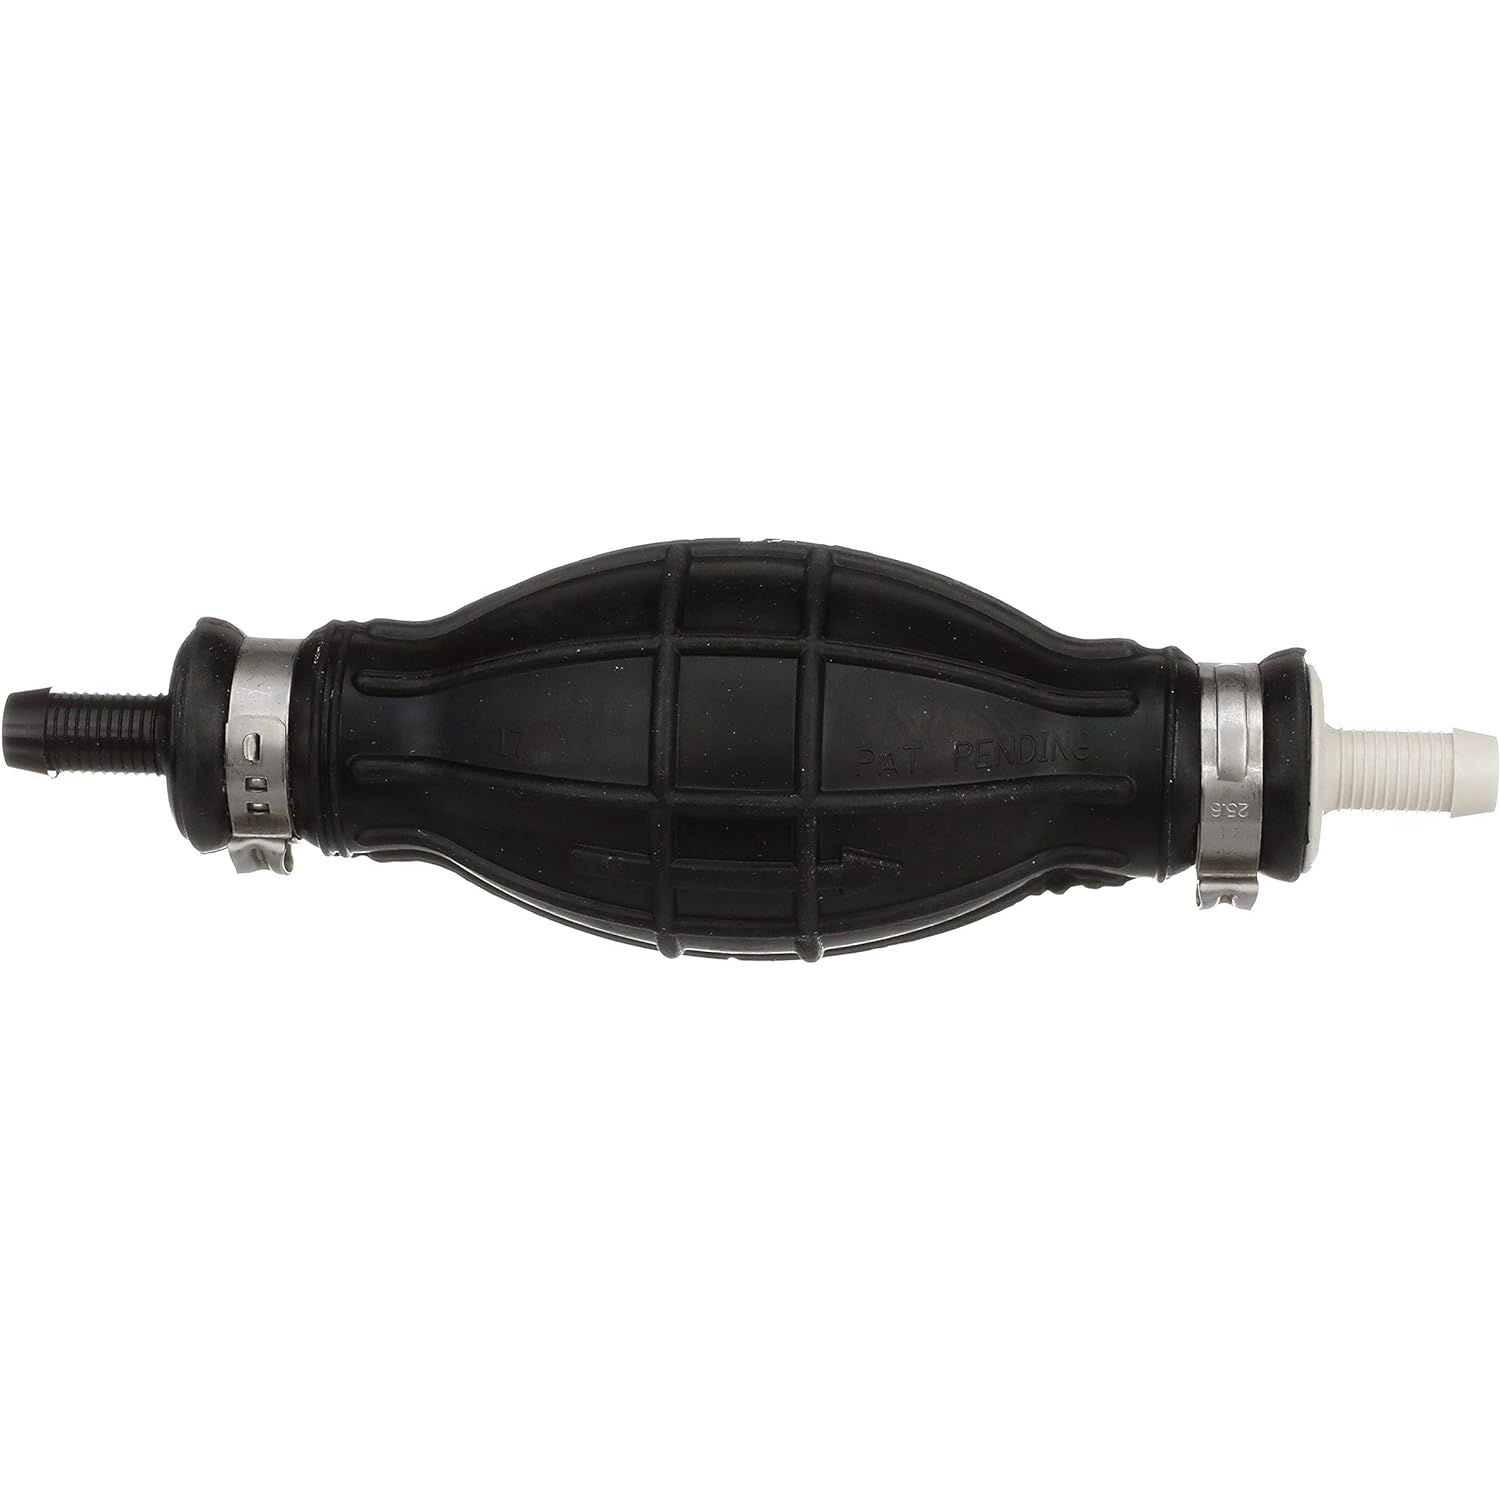 VLM 21301 Valmar Fuel Primer Bulb (3/8")